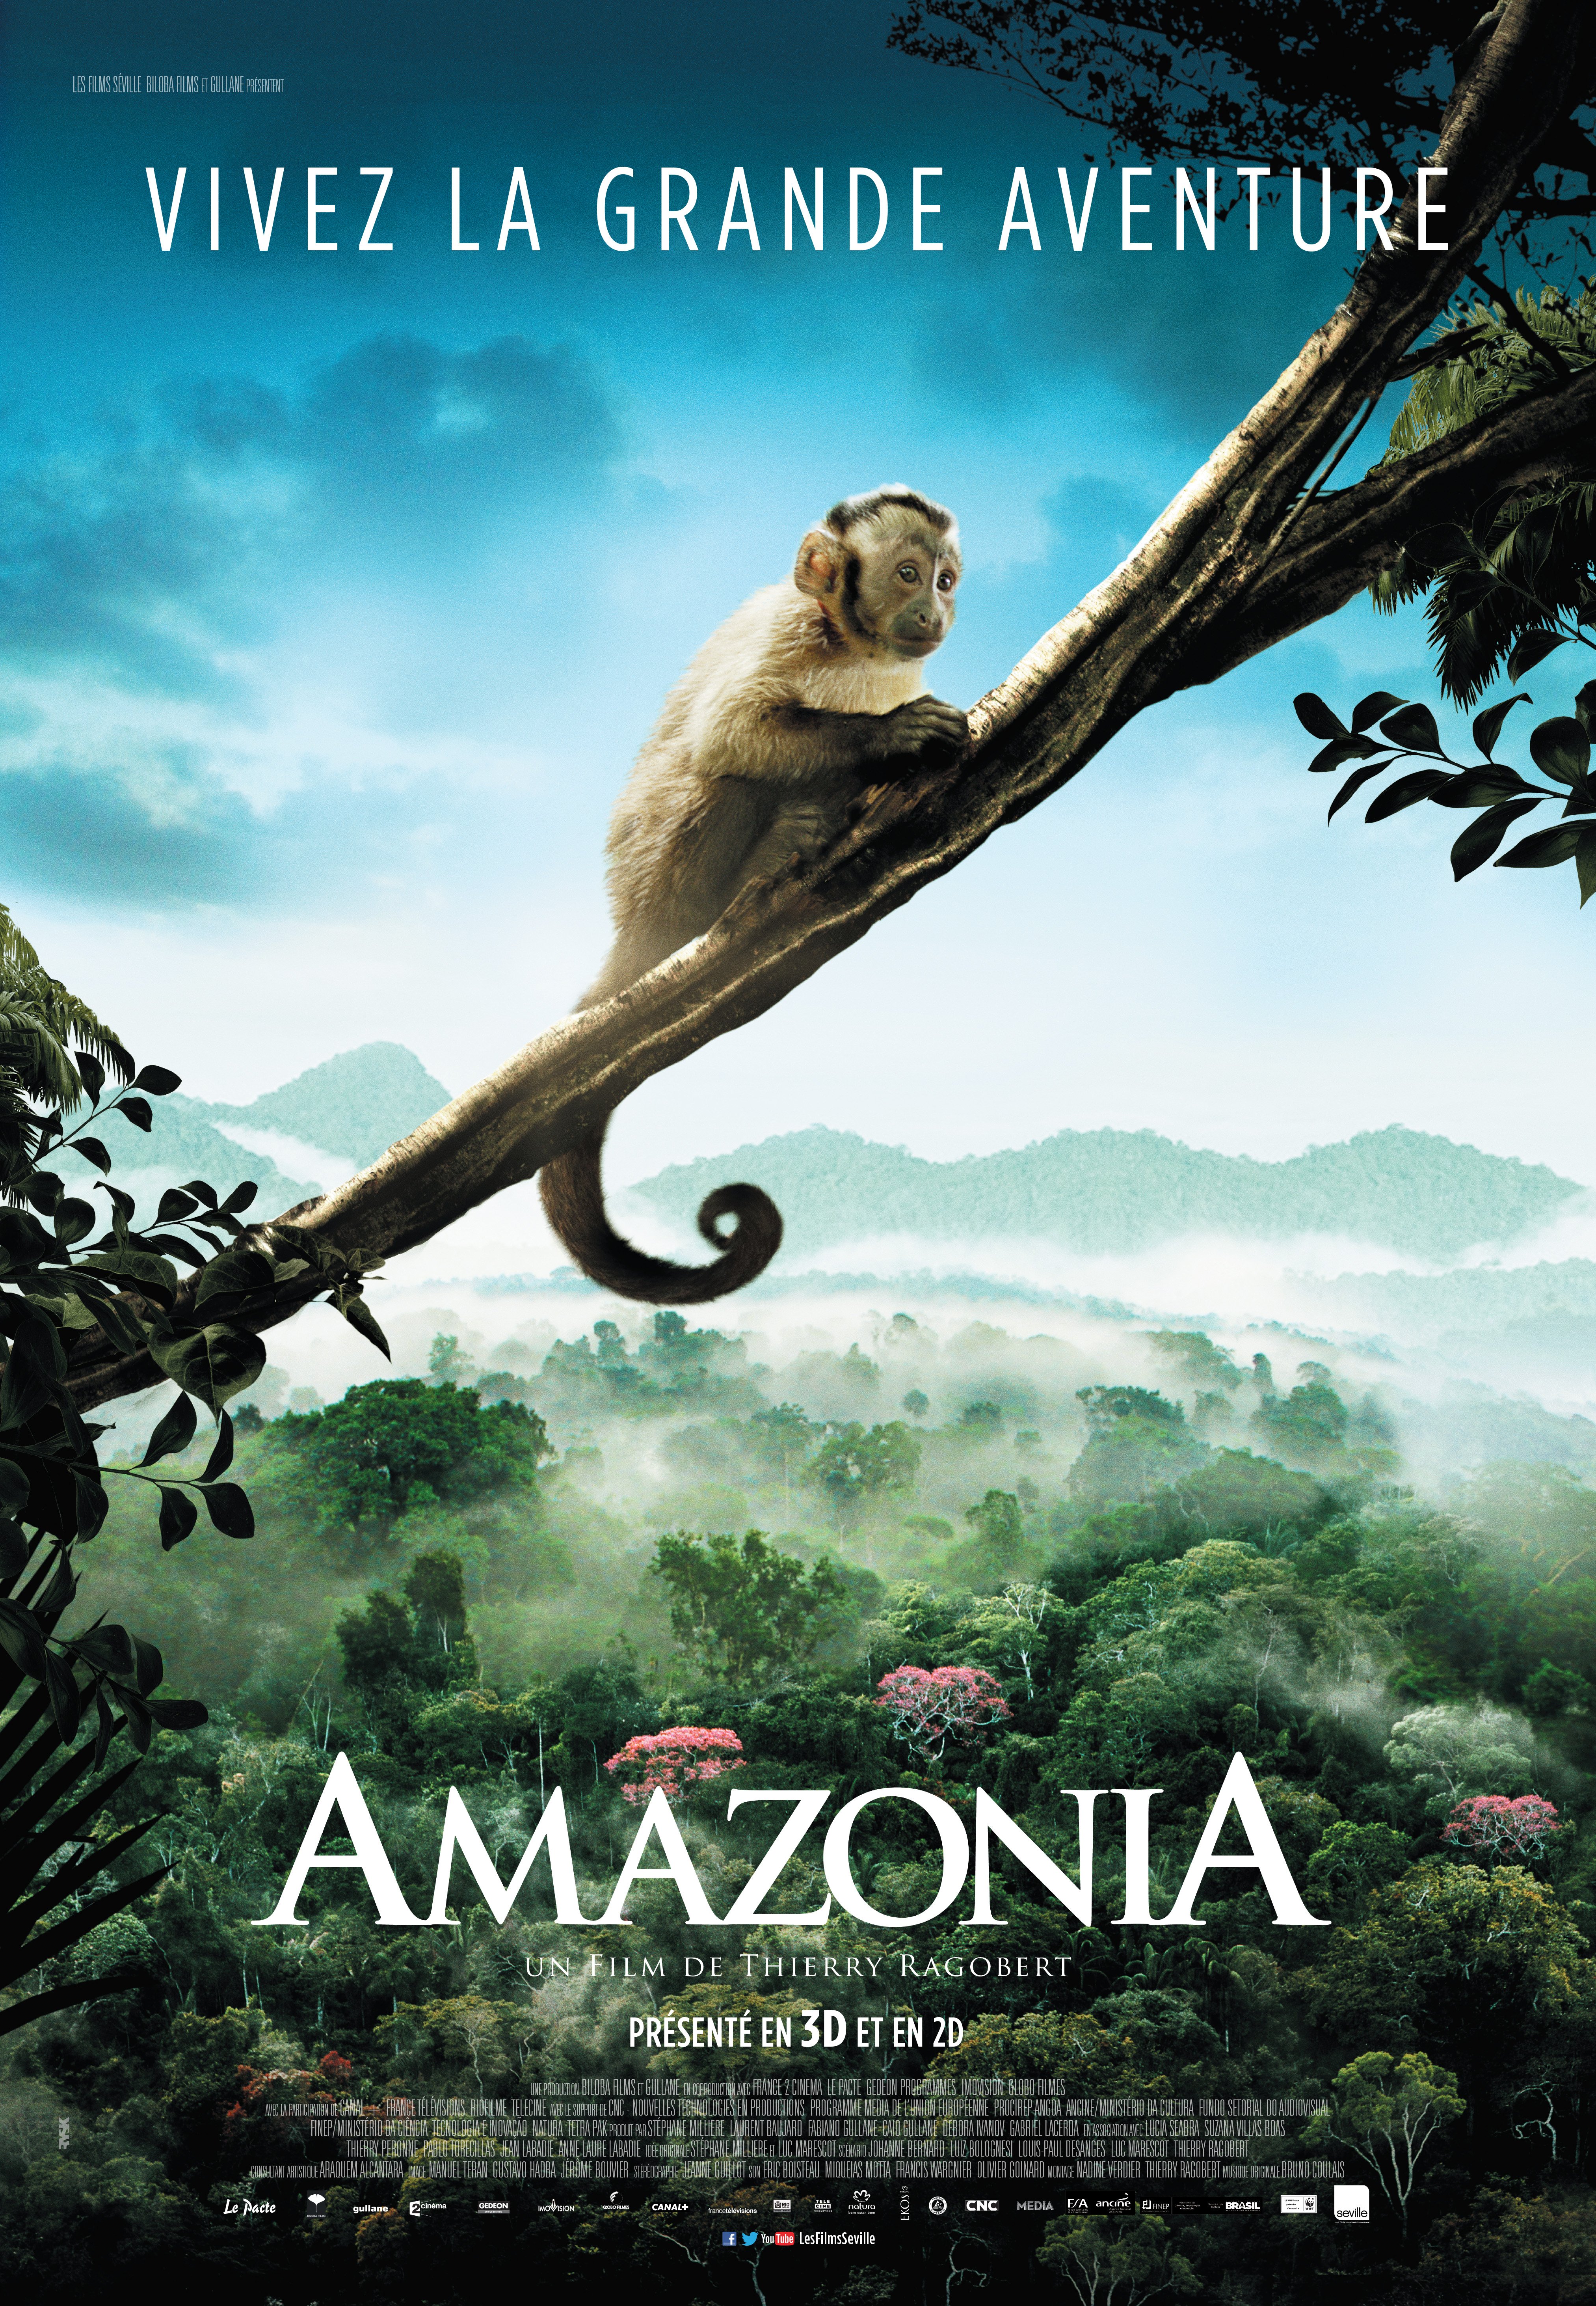 Poster of the movie Amazonia